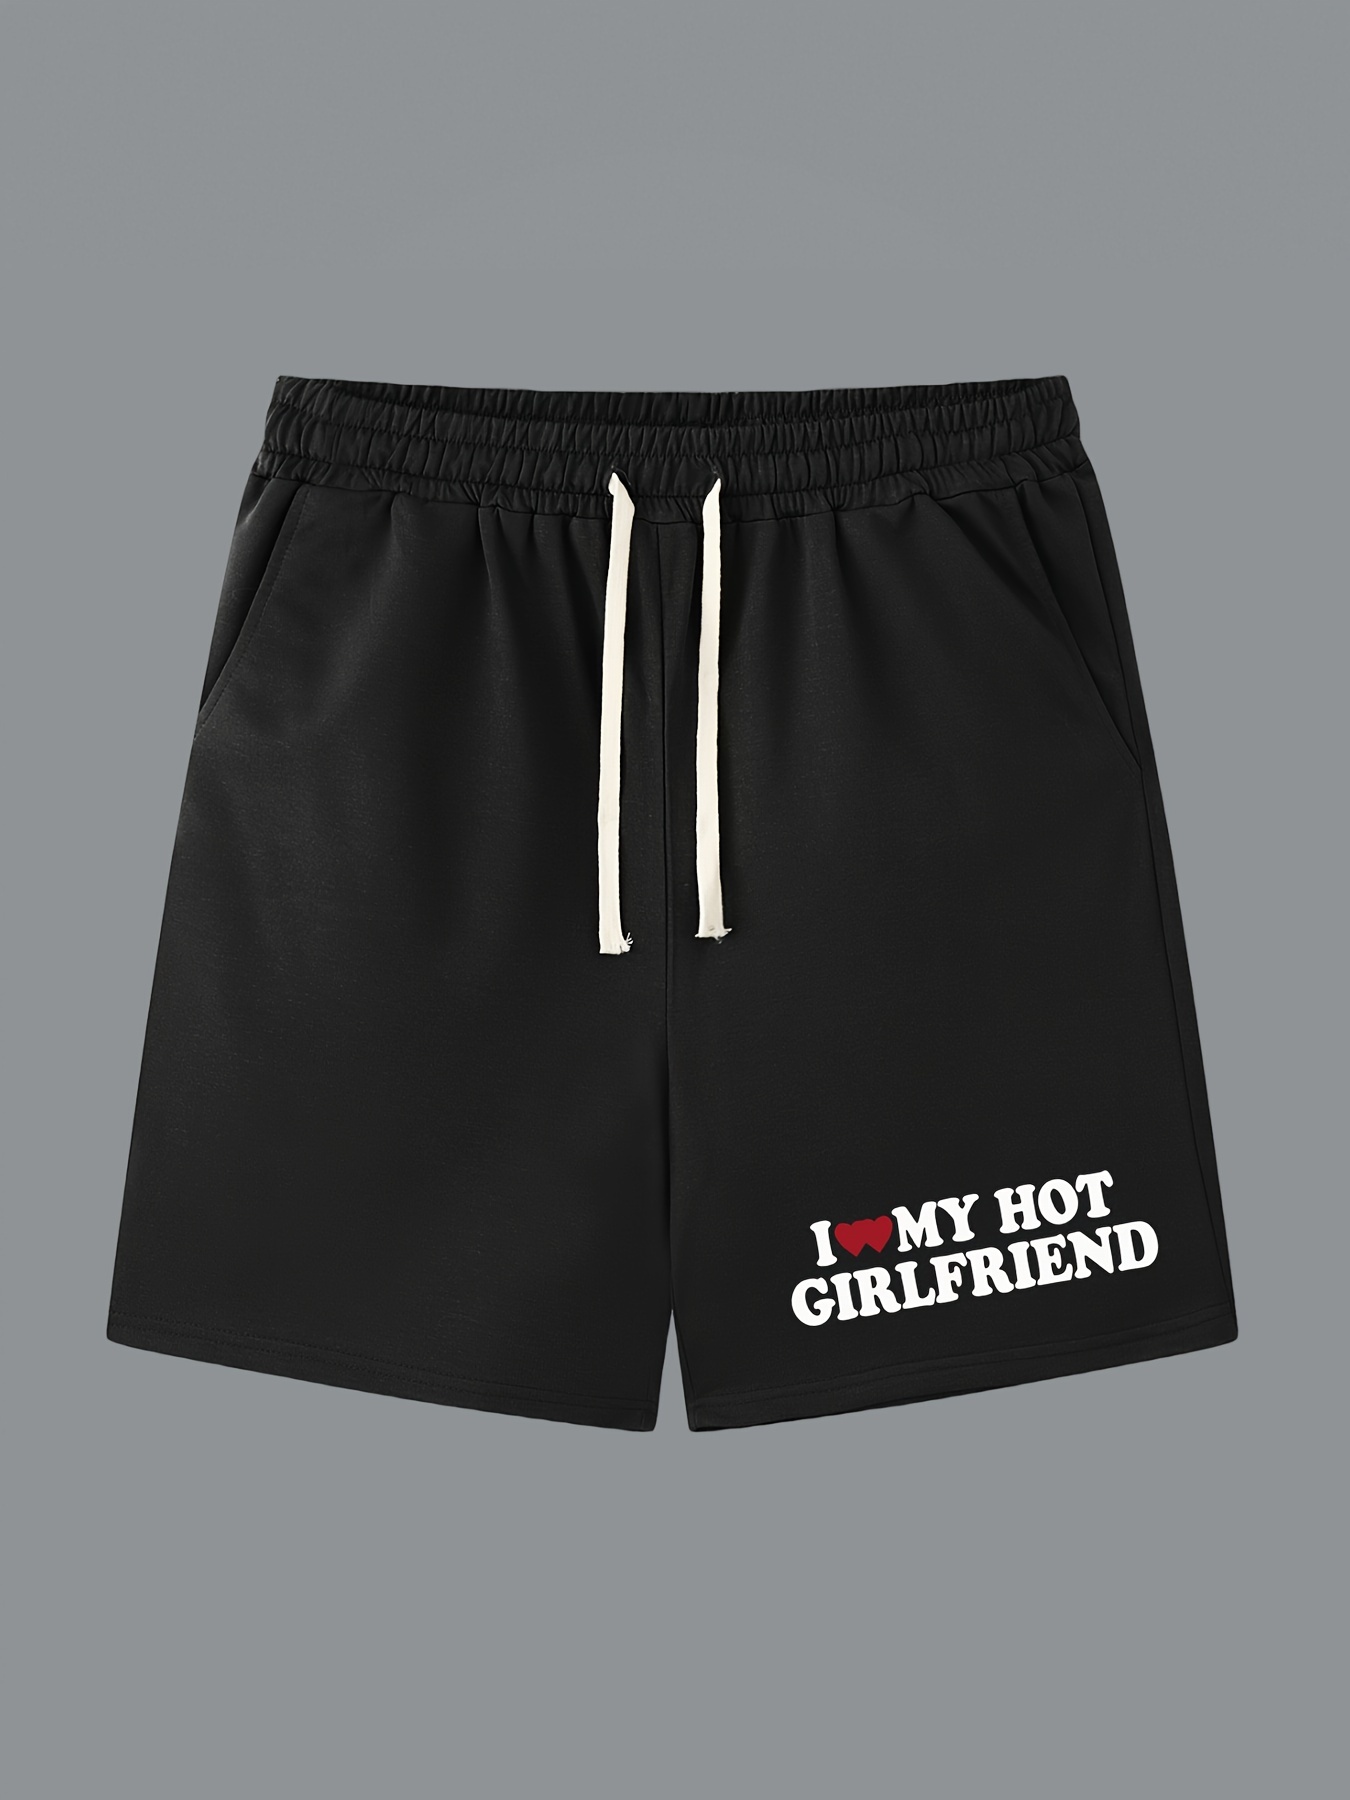 I Love My Girlfriend Shorts Valentine Gift men shorts Tops men